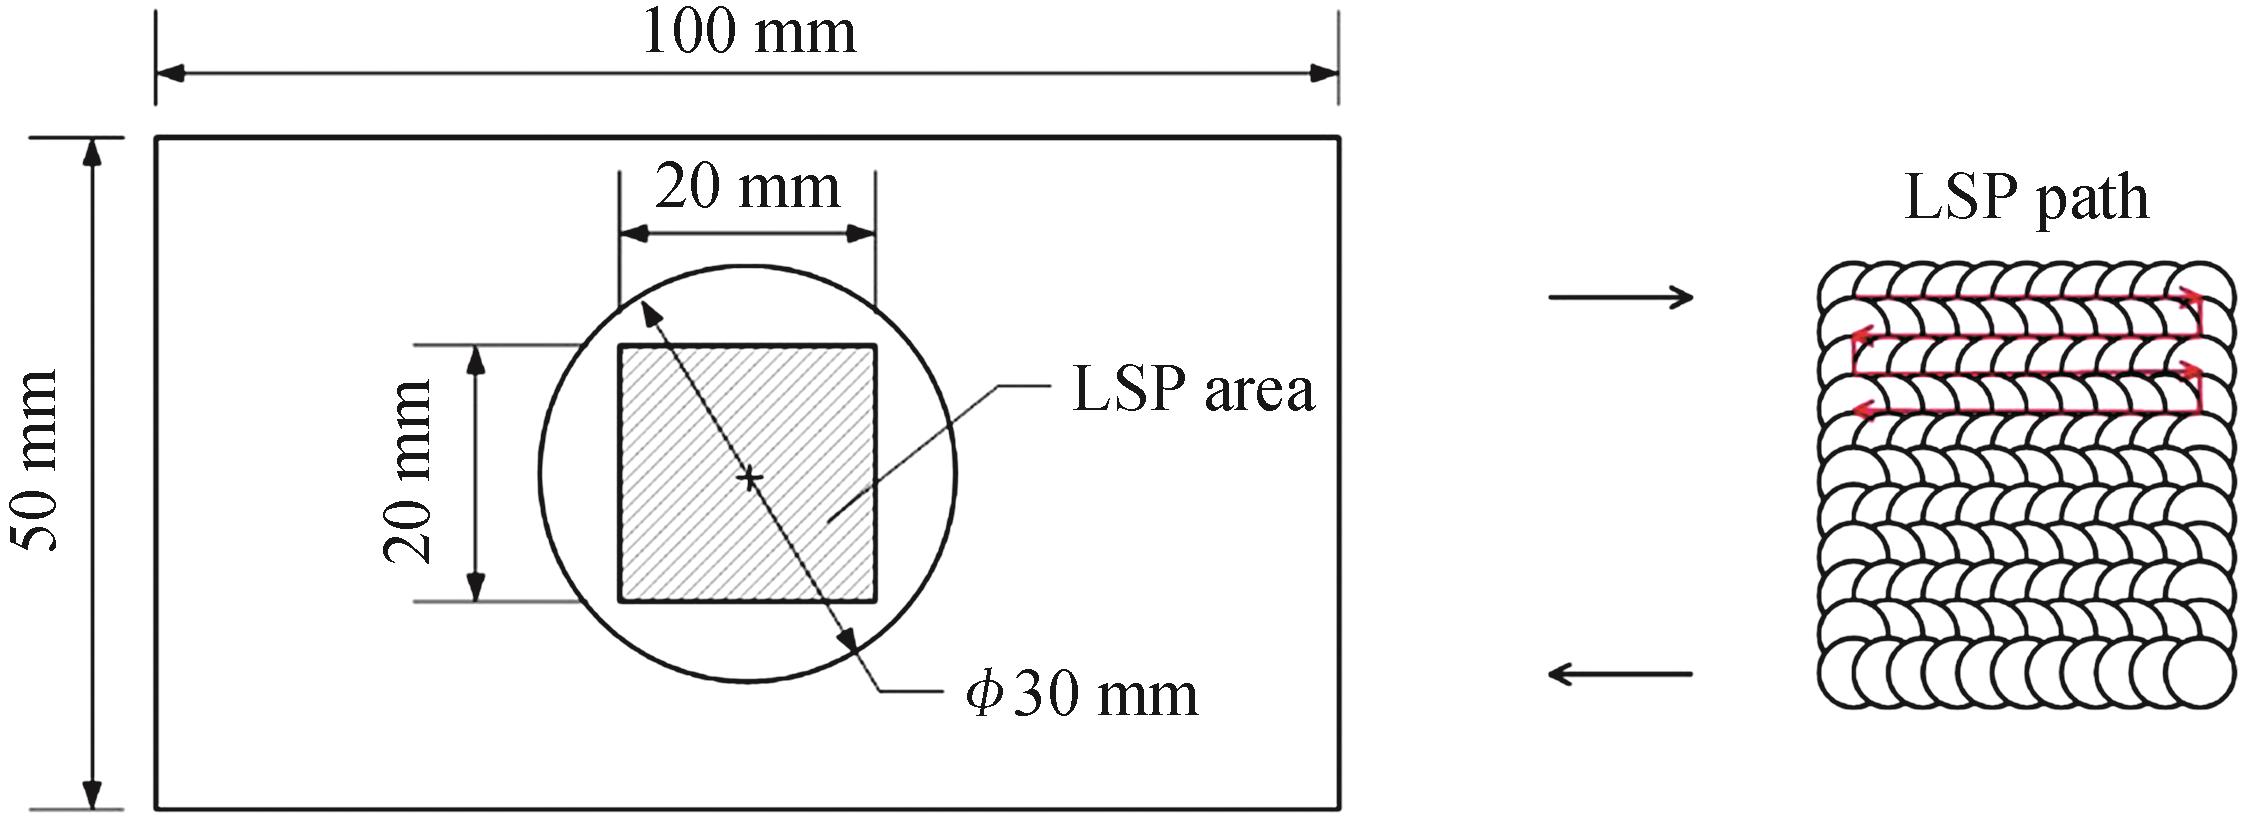 Laser shock area and light spots overlap